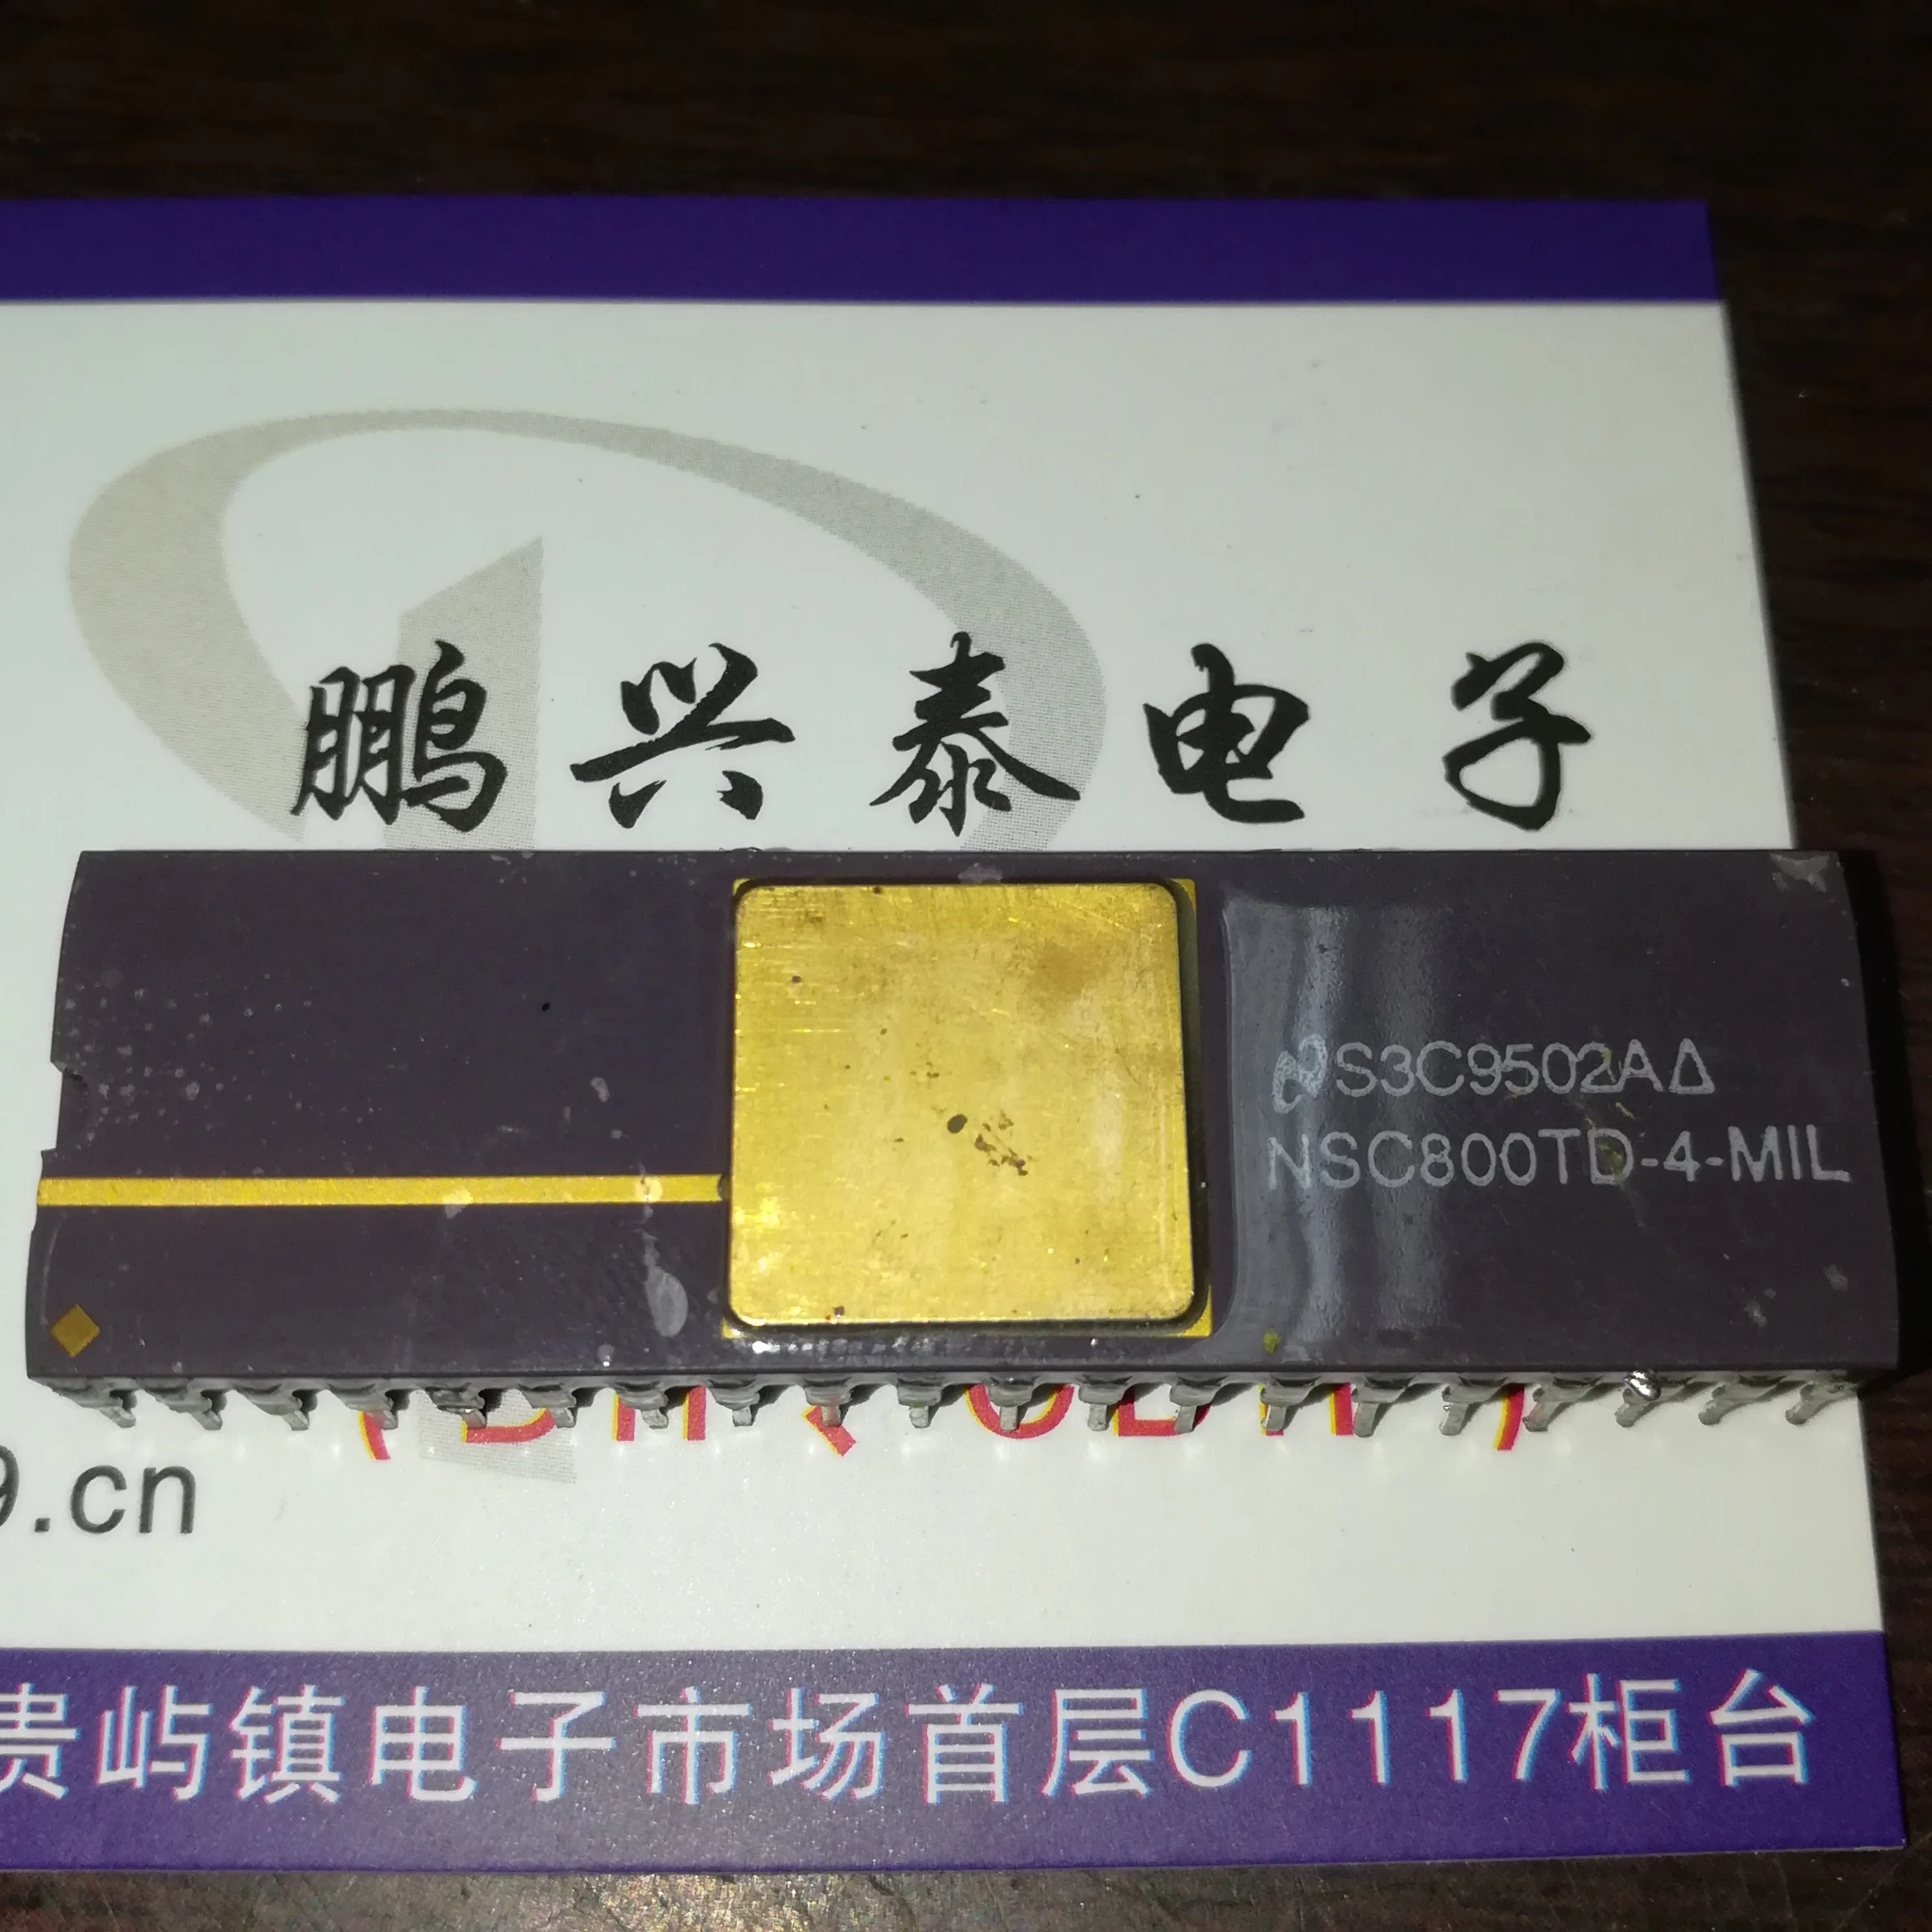 NSC800TD-4-MIL, NSC800 Desoldador / Superficie de oro microprocesador de 8 bits. 8080 CPU vieja NSC800TD. CDIP-40 pin paquete de cerámica vintage chips